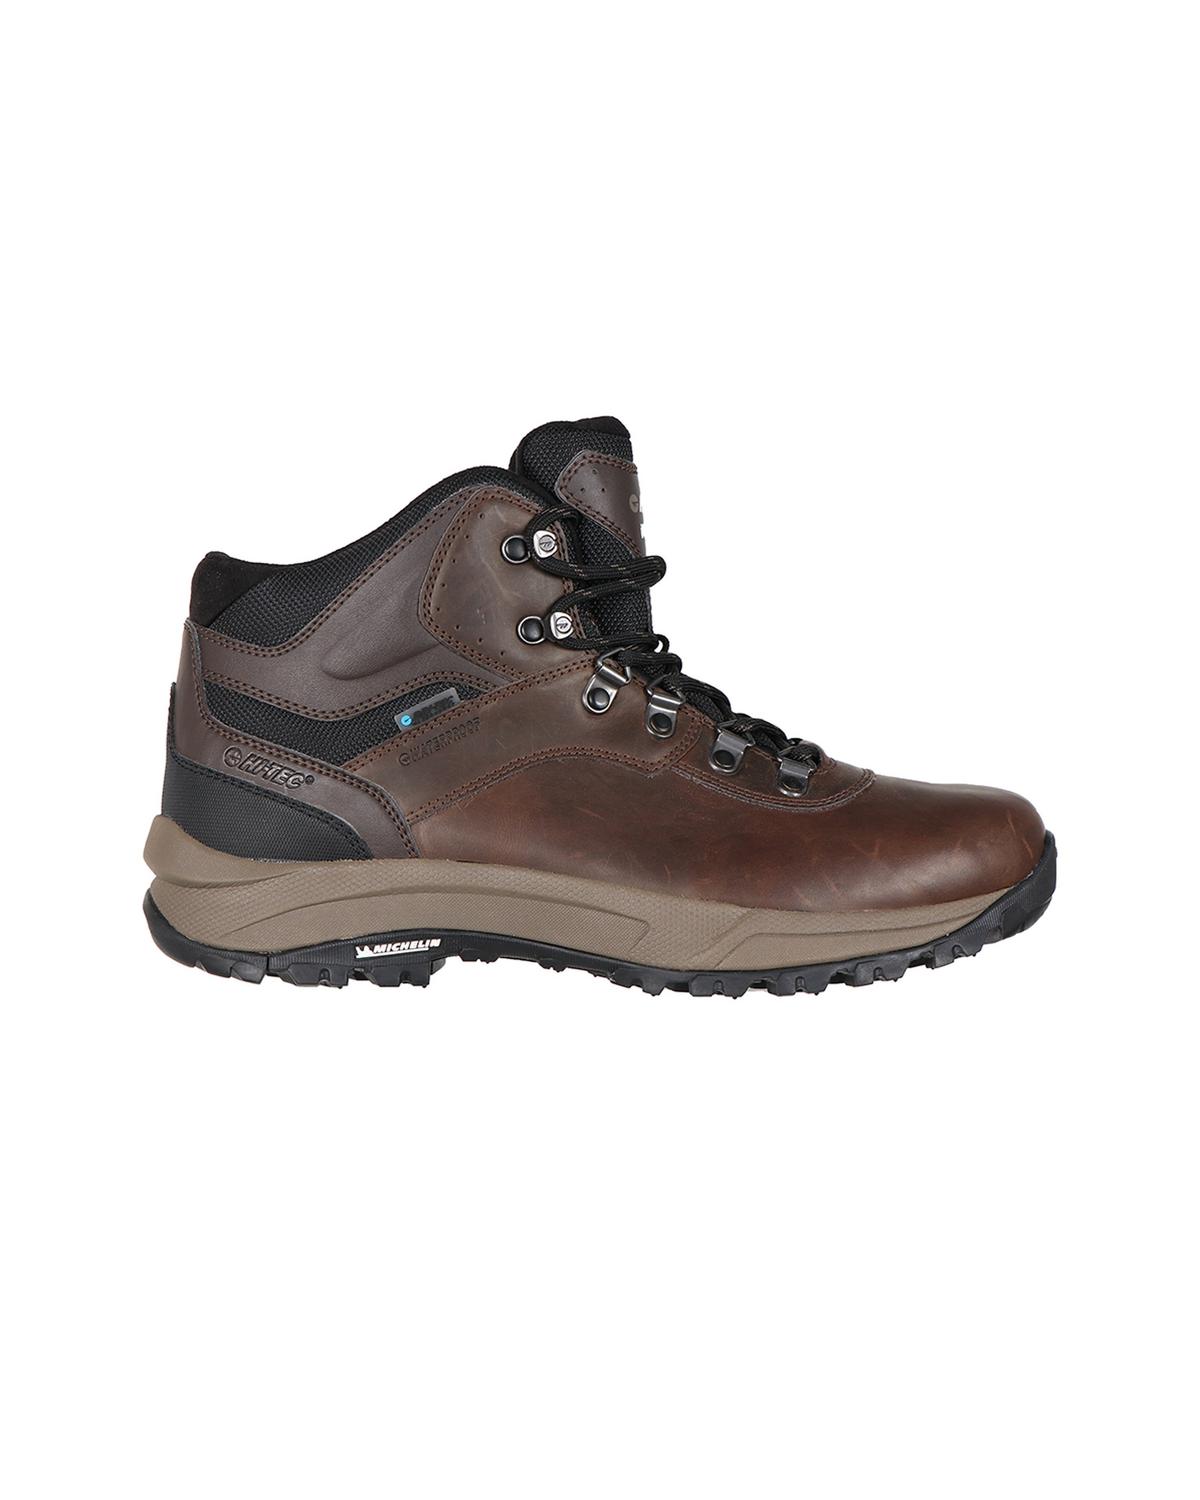 Hi-Tec Women's Altitude 6 Mid Hiking Boots -  Chocolate/Chocolate